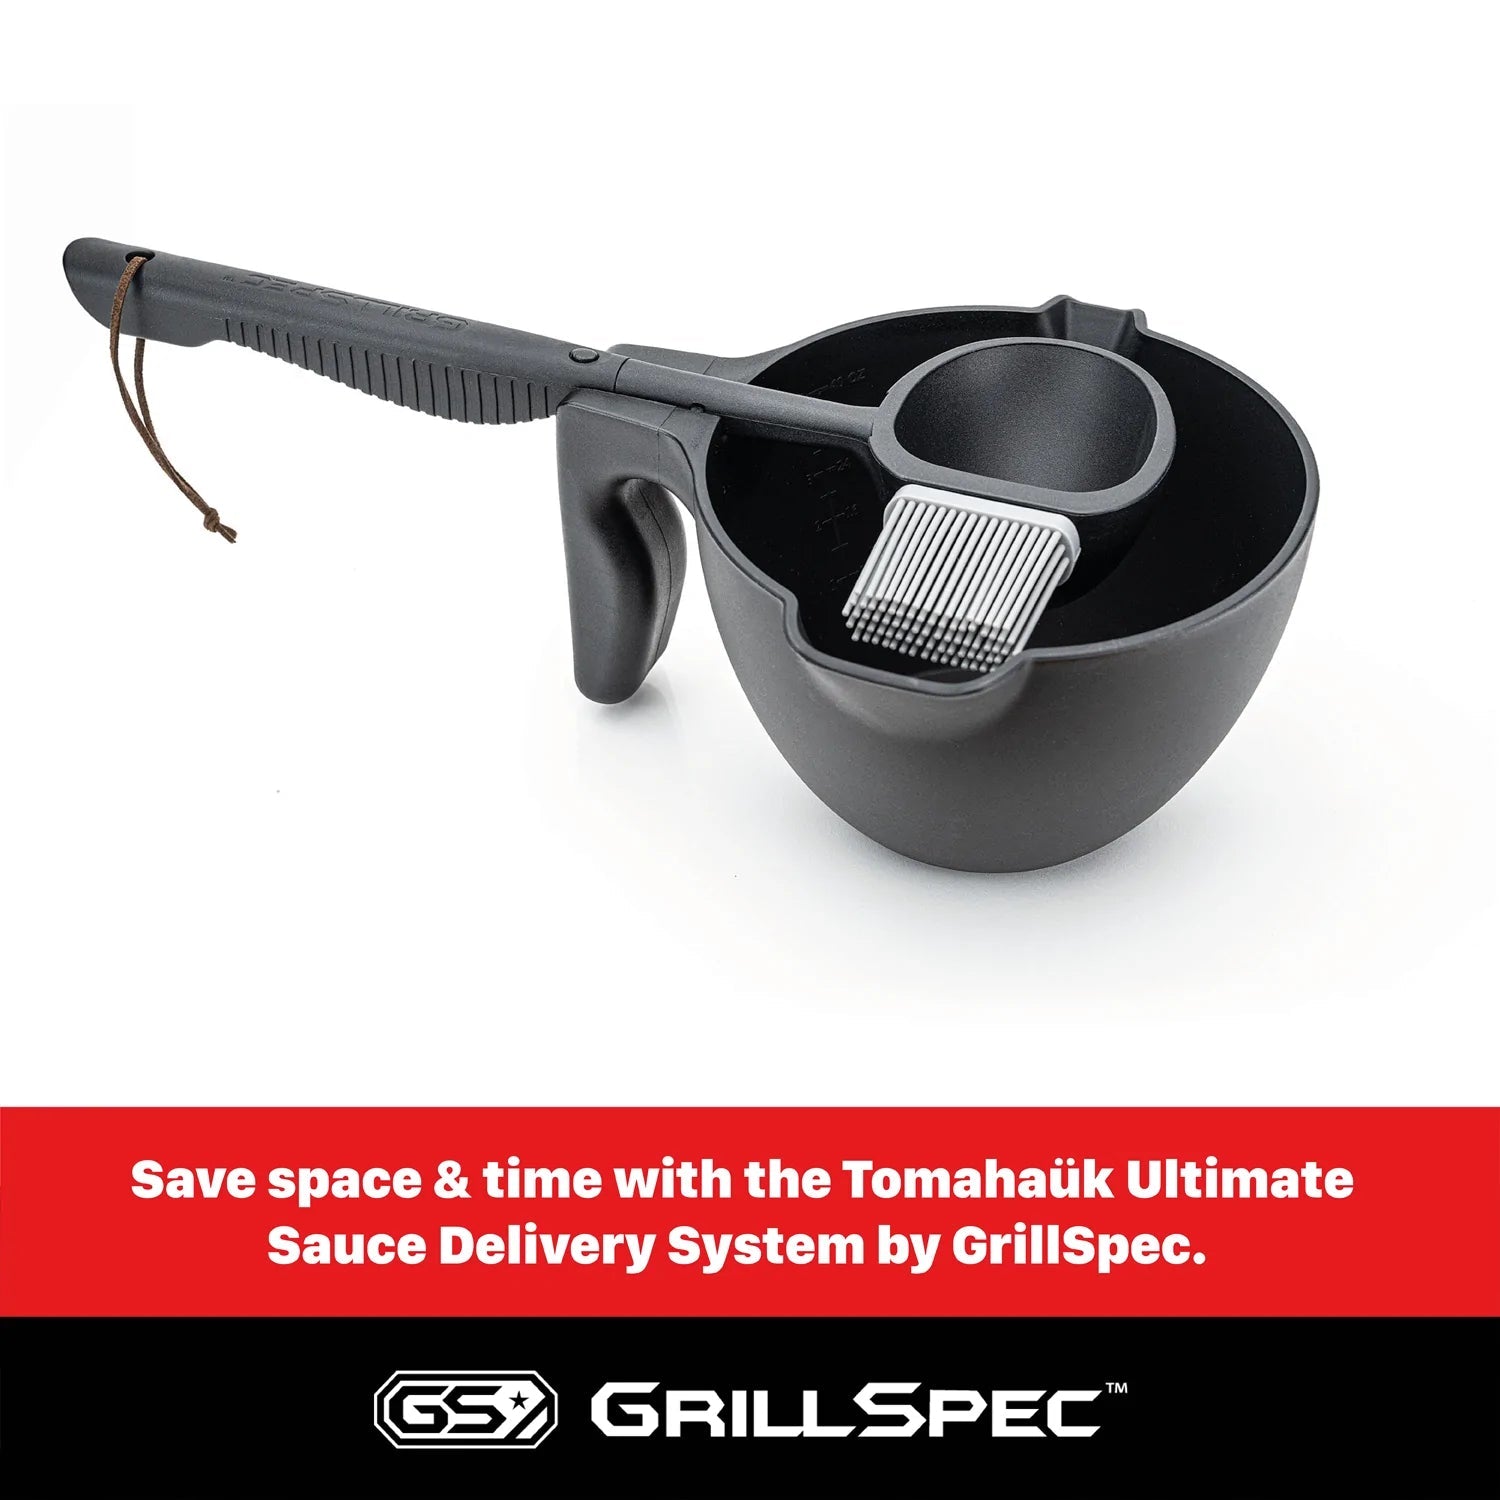 GrillSpec Tomahauk 40 oz. Basting Bowl and Brush Set, With Bowl, Ladle Spoon and 3 Basting Brushes